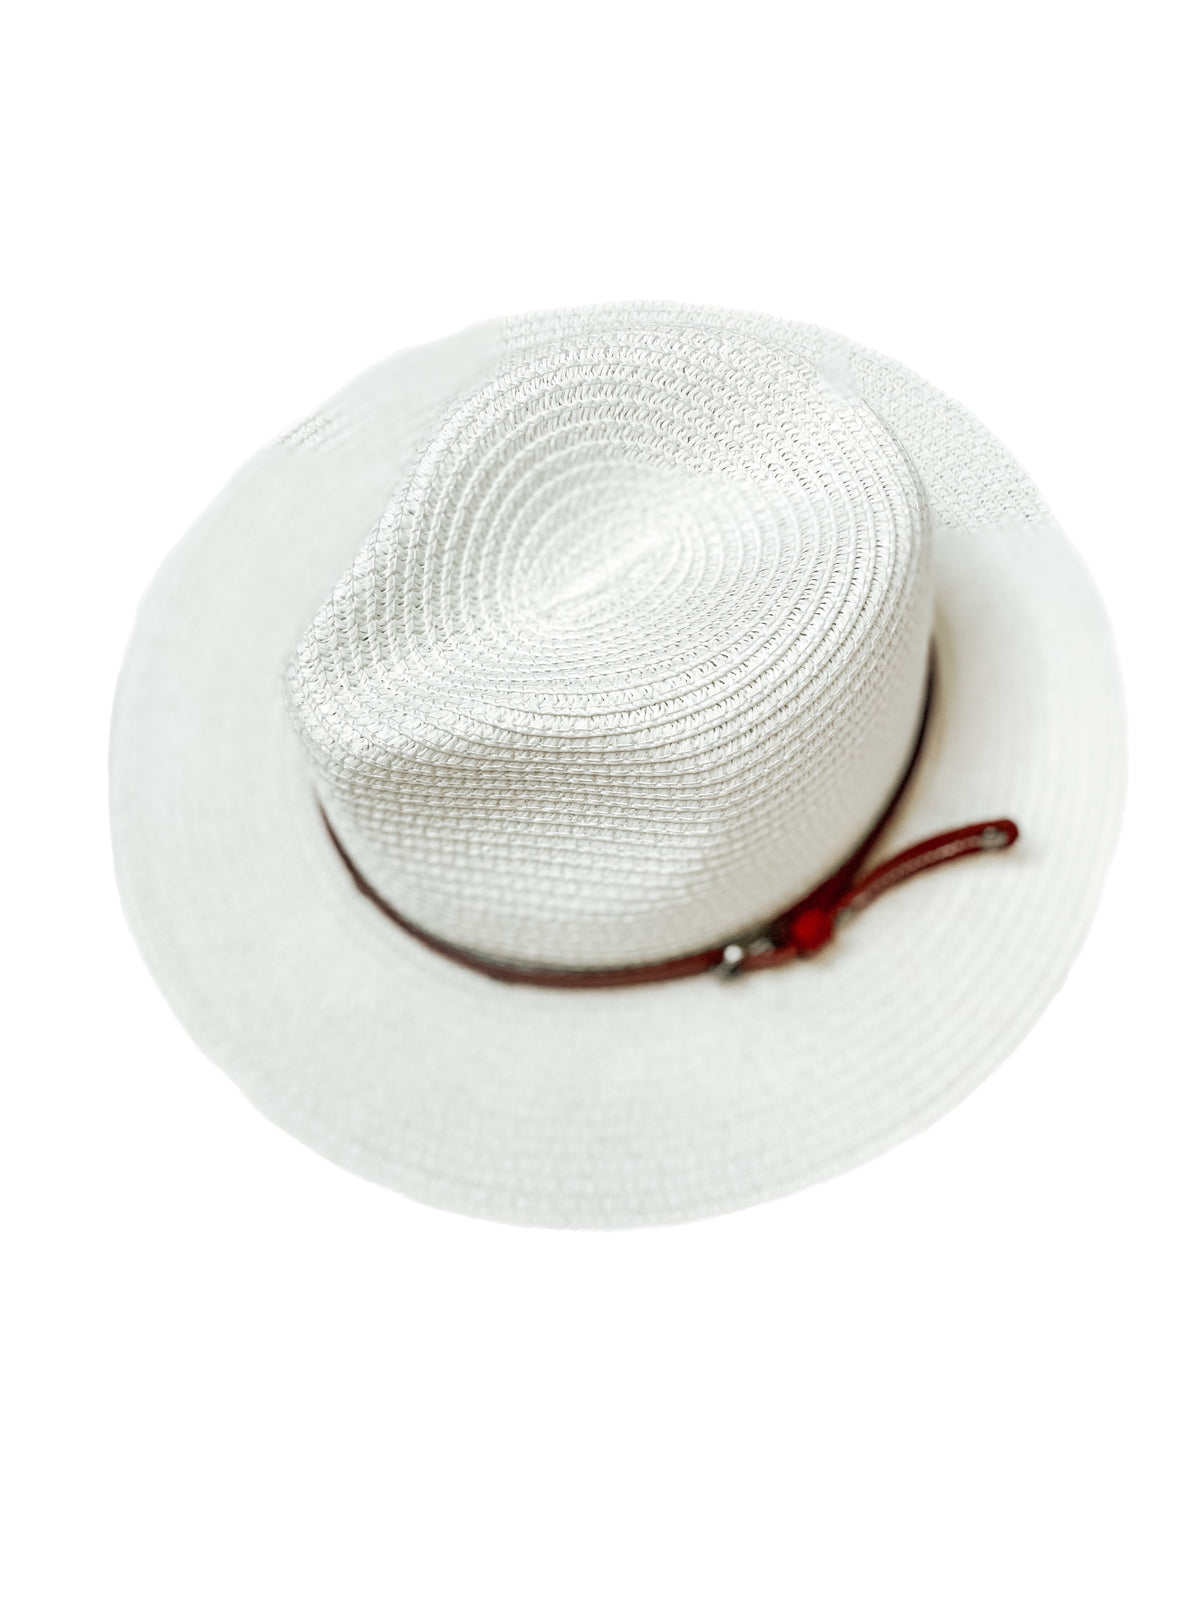 My Favorite Beach Hat - White